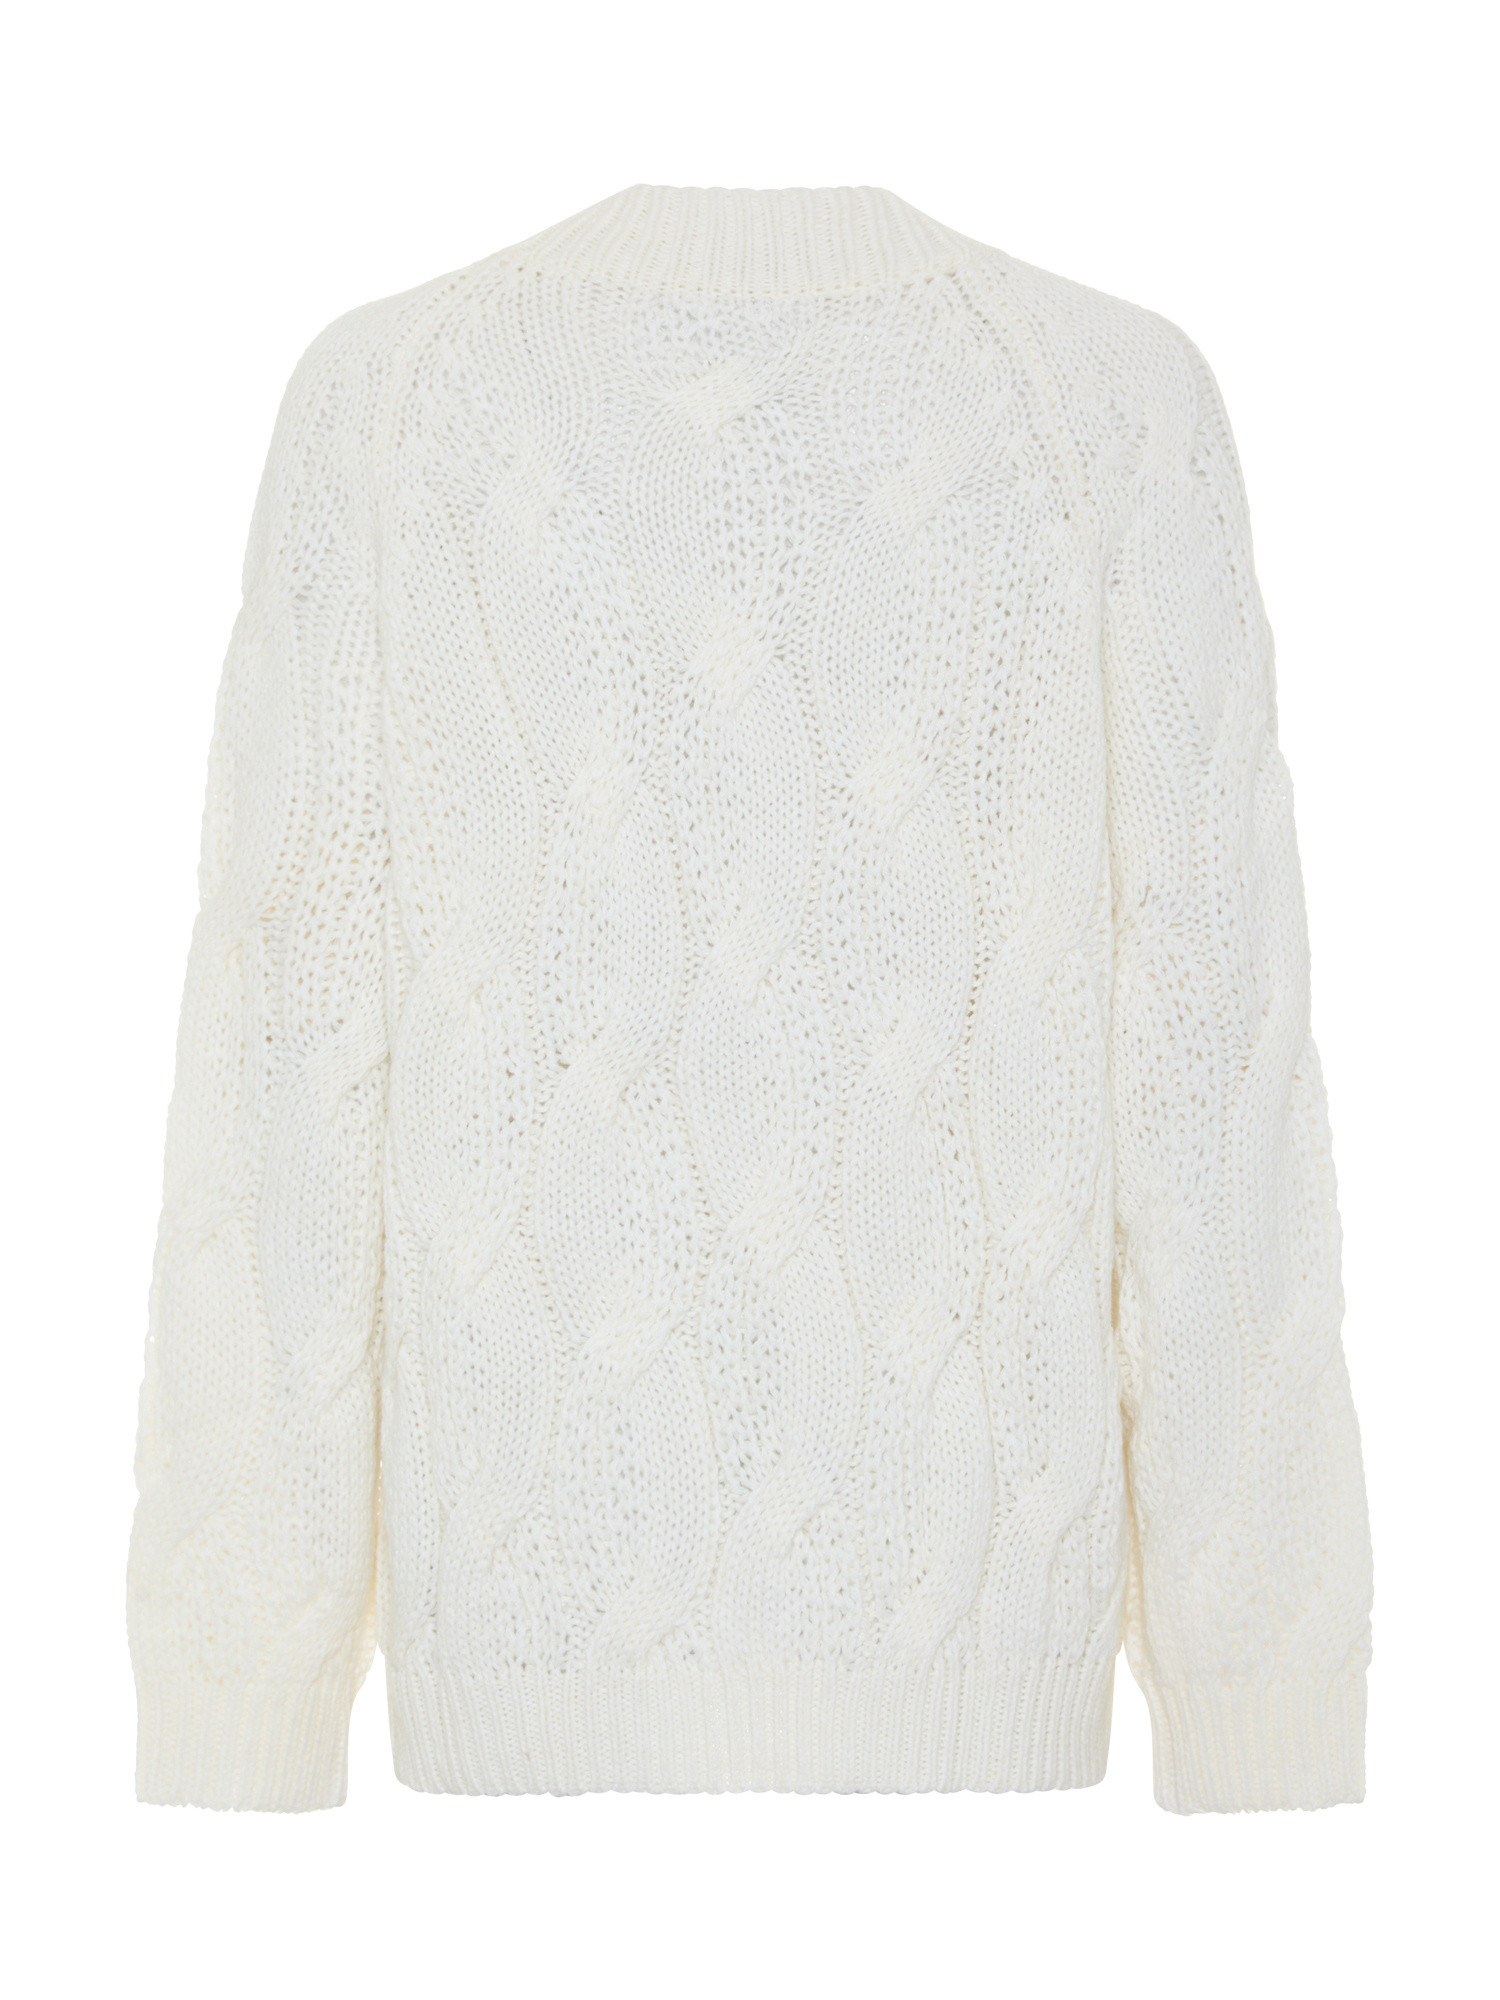 Koan - Crewneck sweater with braid motif, White Cream, large image number 1